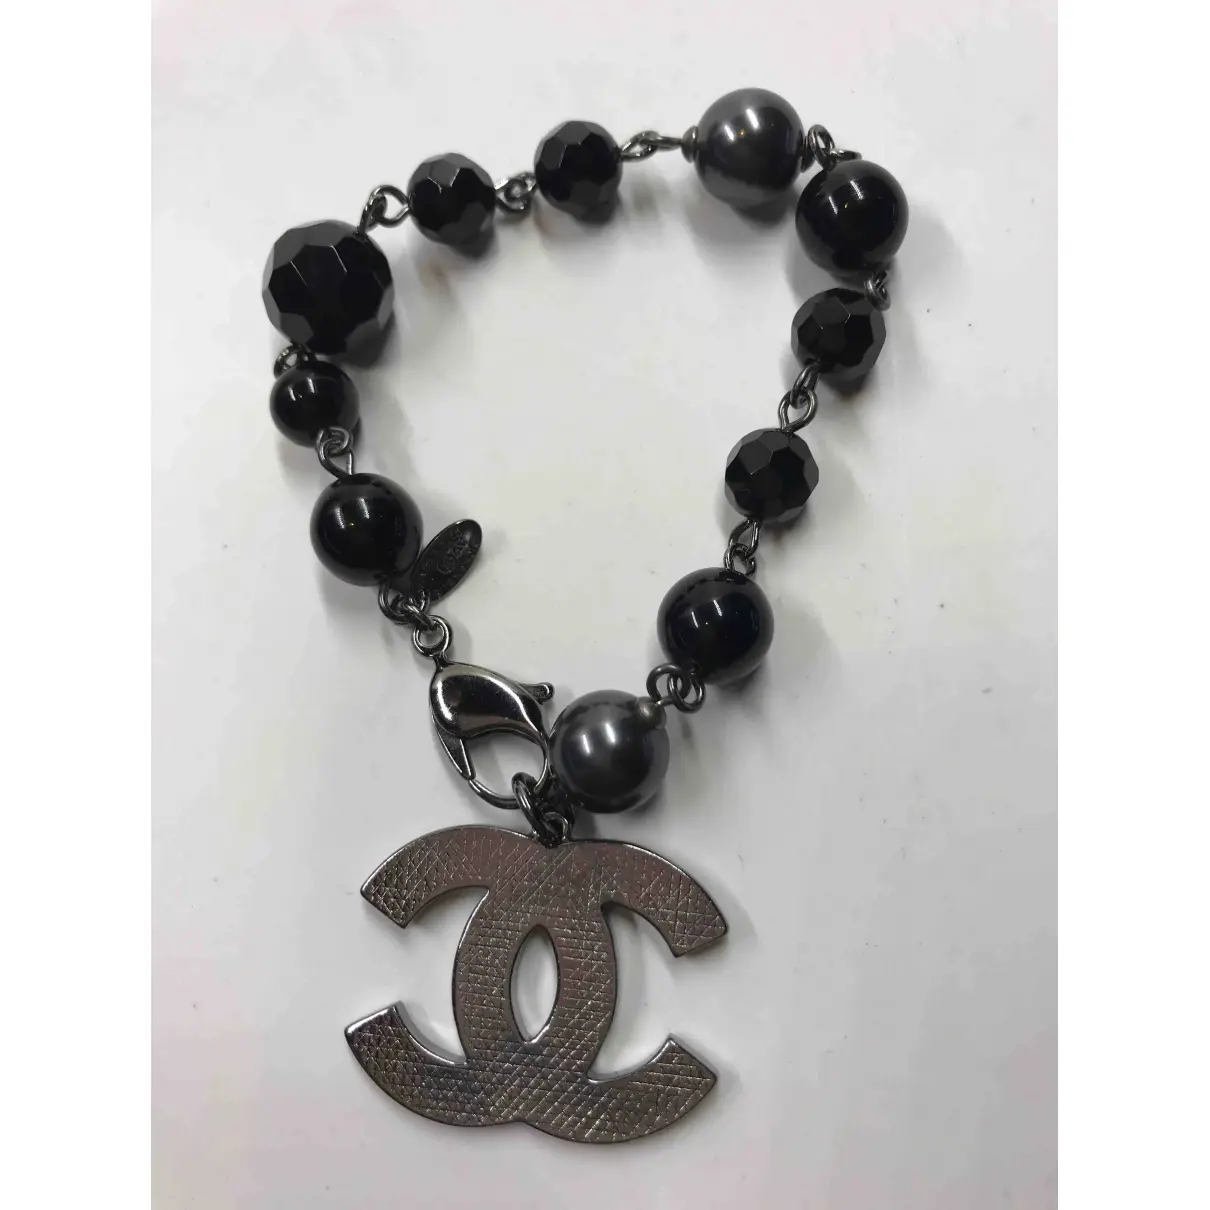 Buy Chanel CC bracelet online